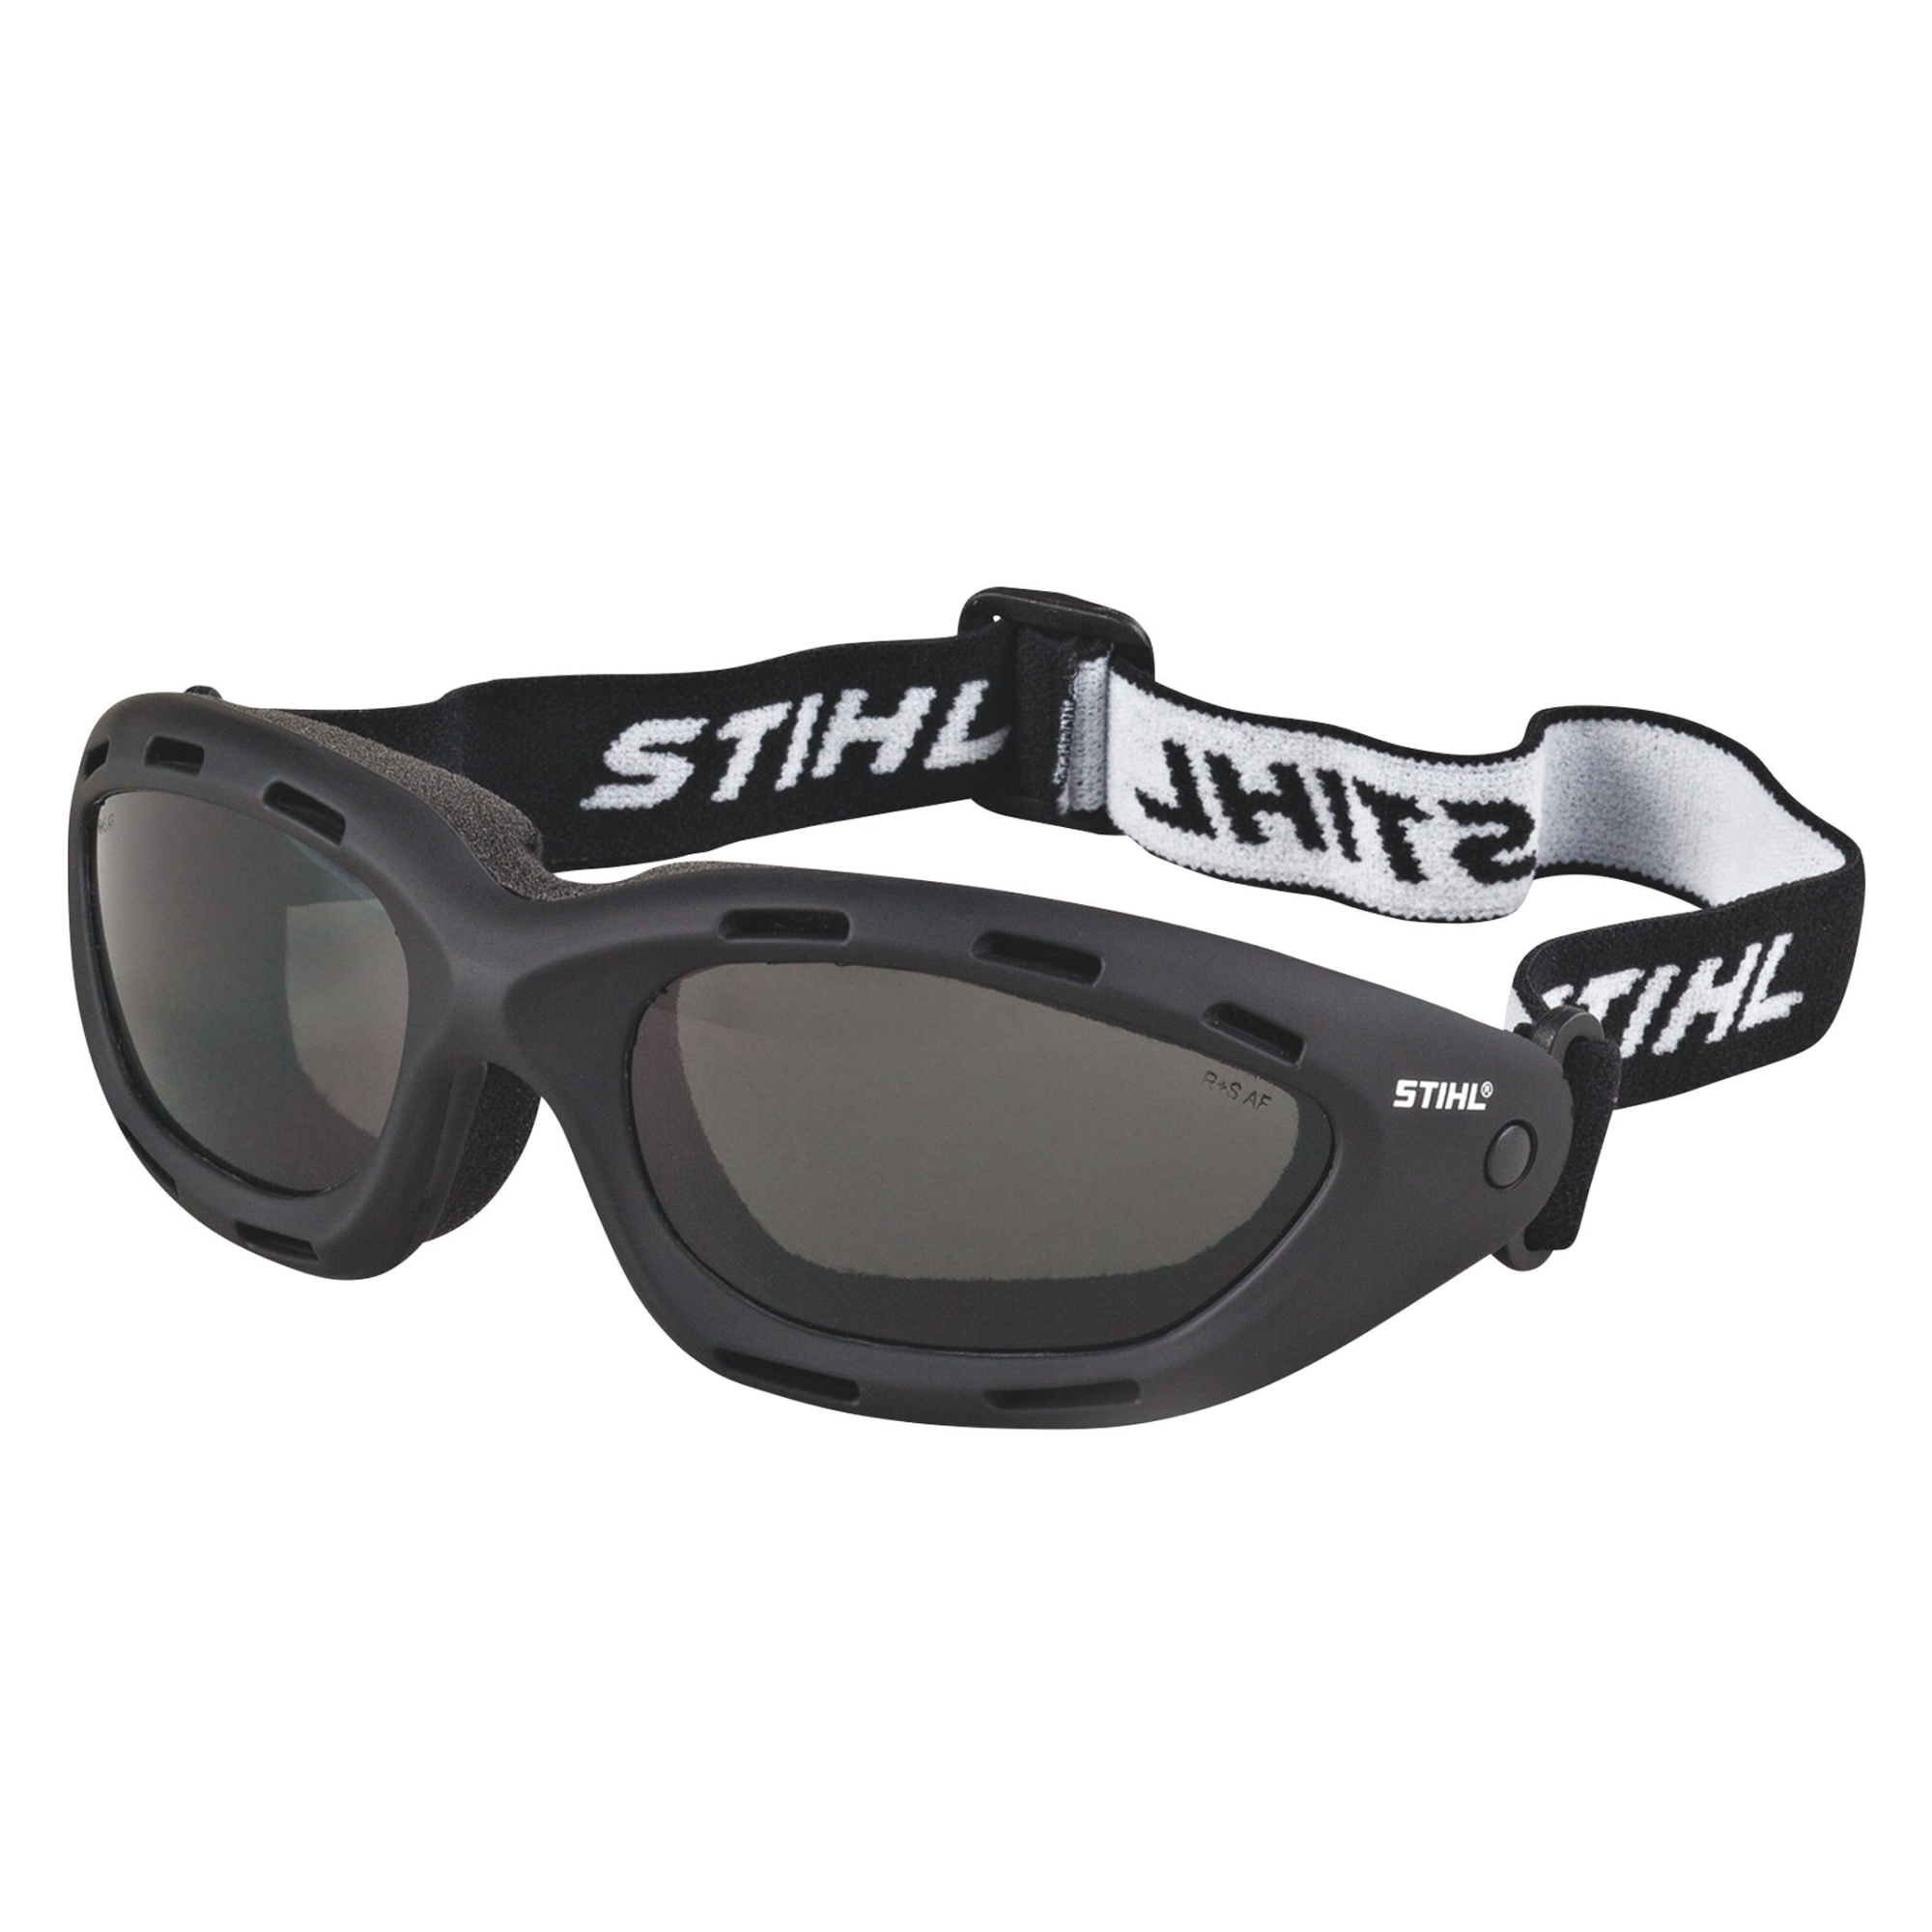 Stihl Adjustable Goggles, Smoke Lens